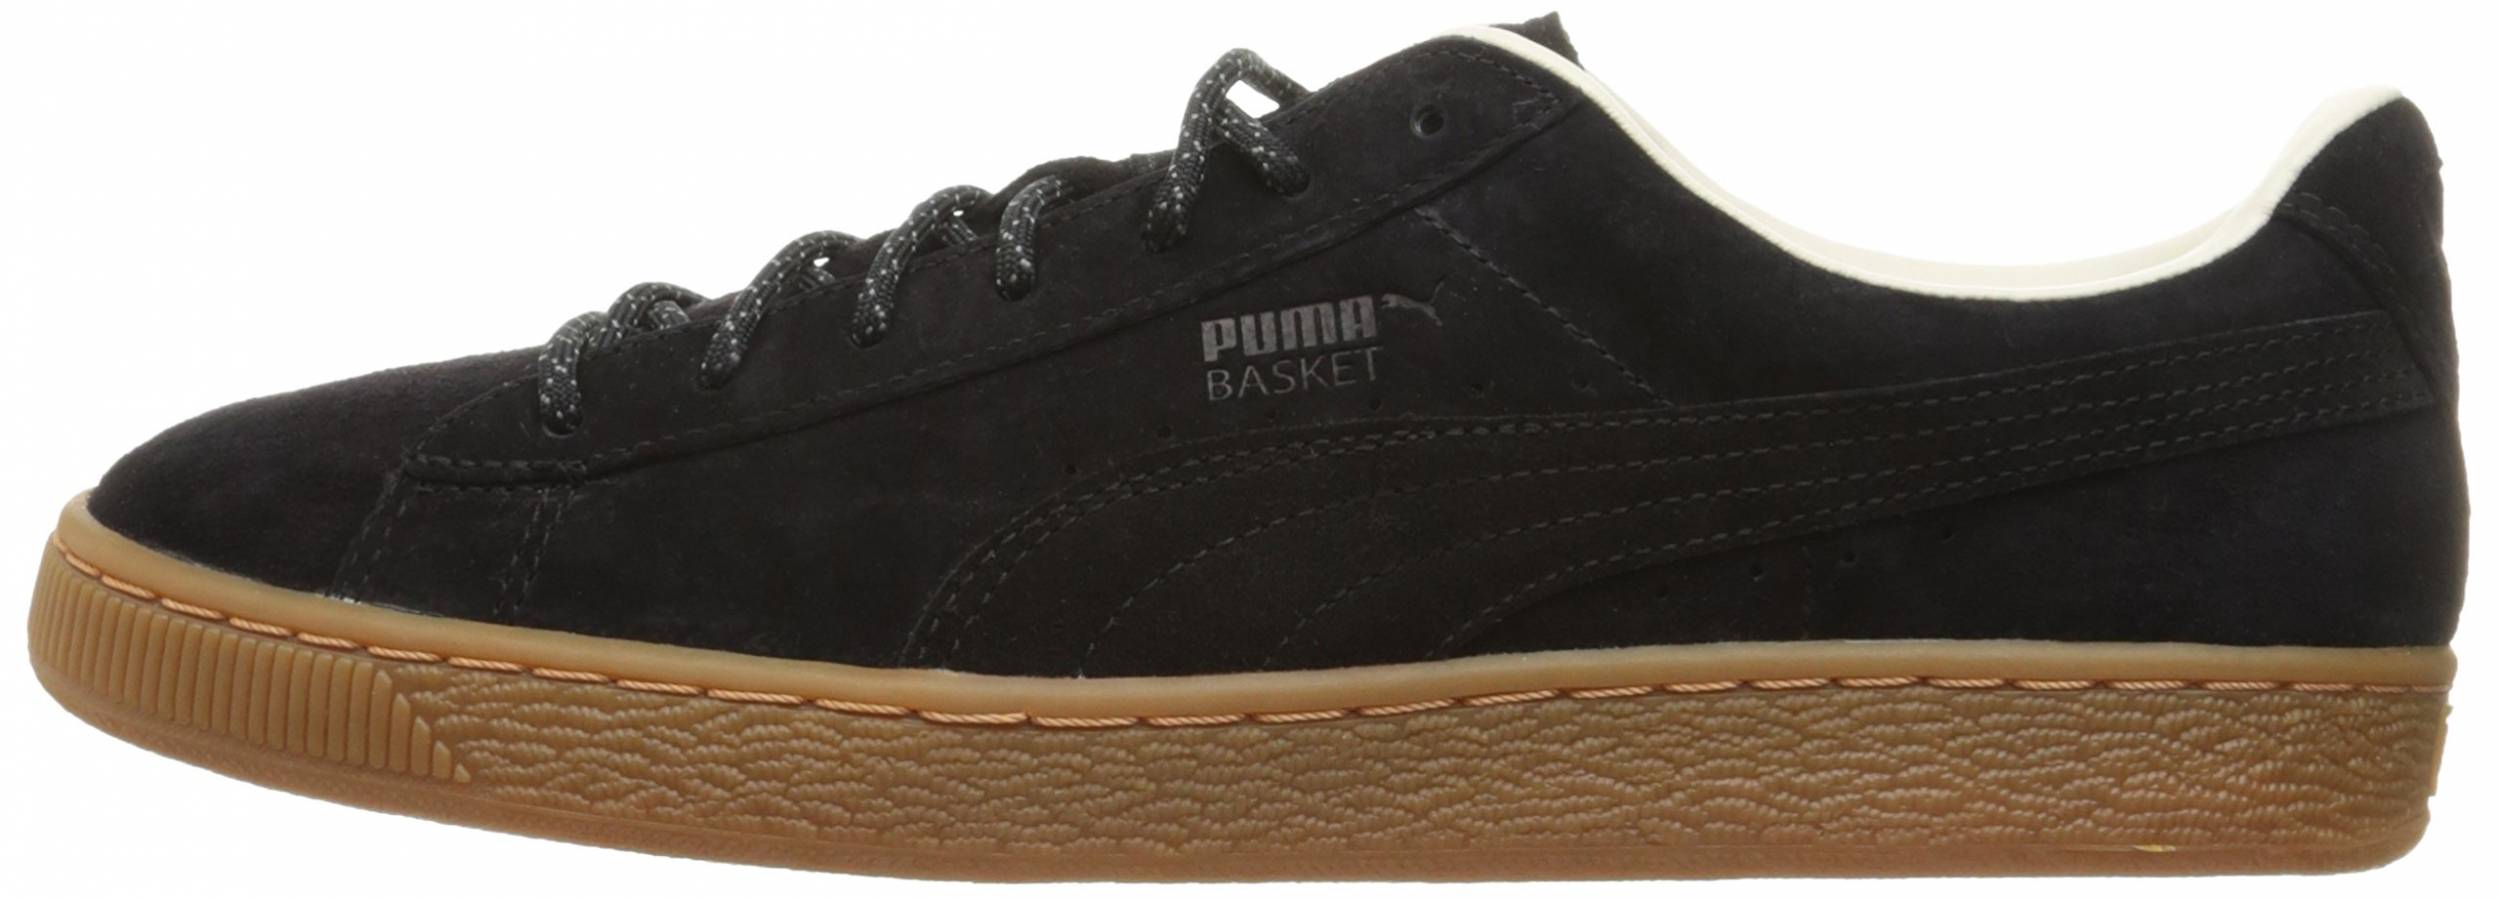 puma basket classic leather